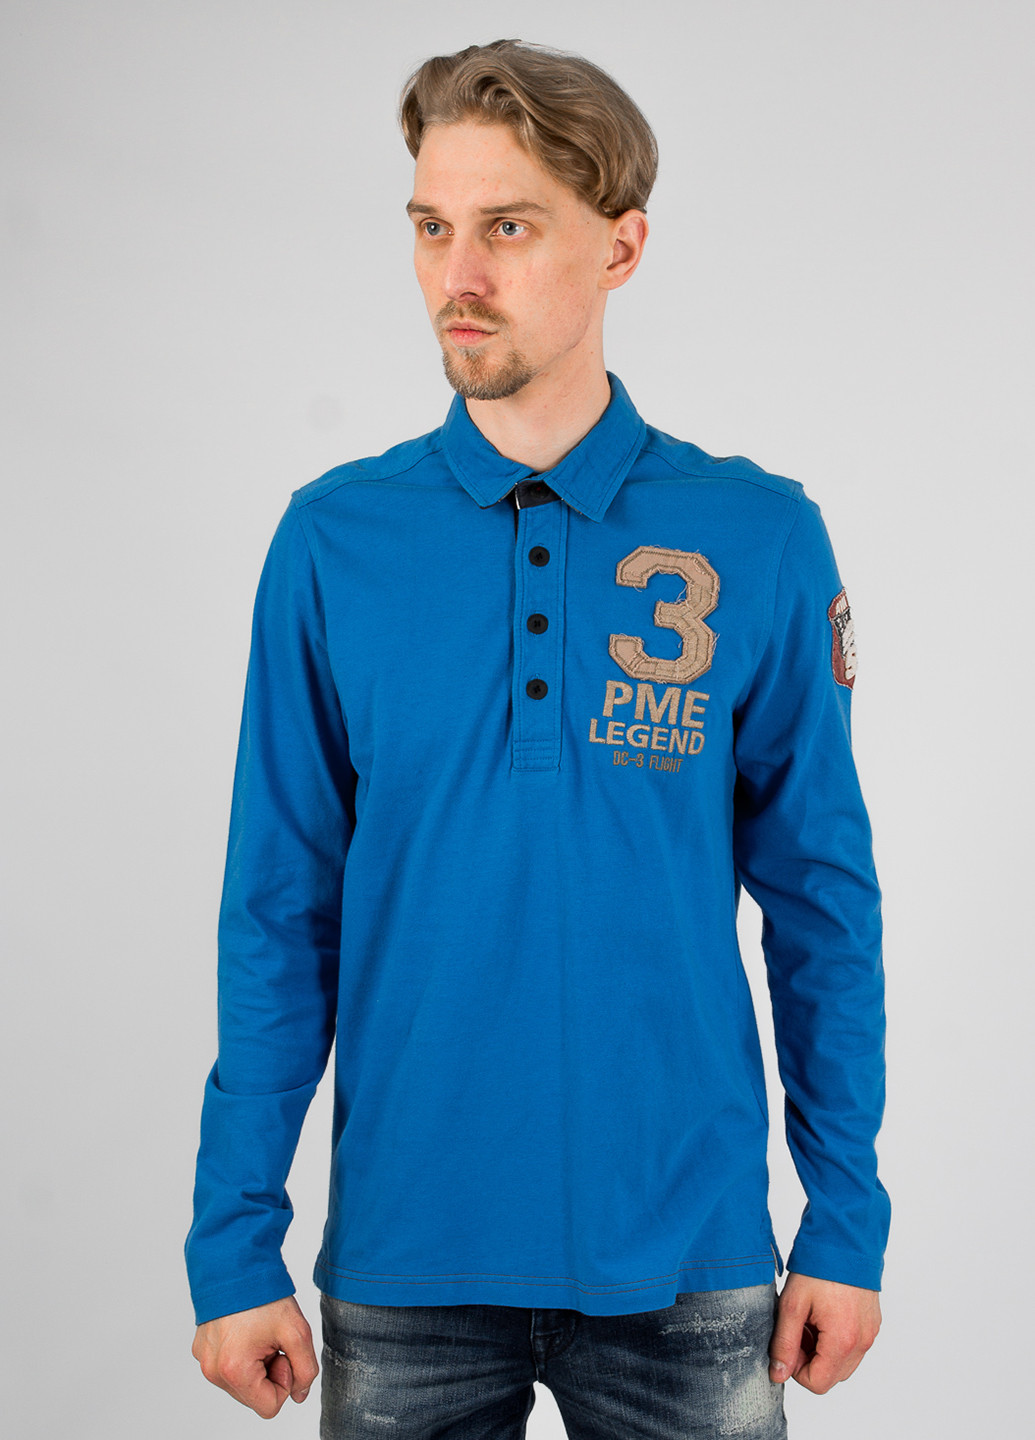 Светло-синяя футболка-поло для мужчин Pme Legend однотонная